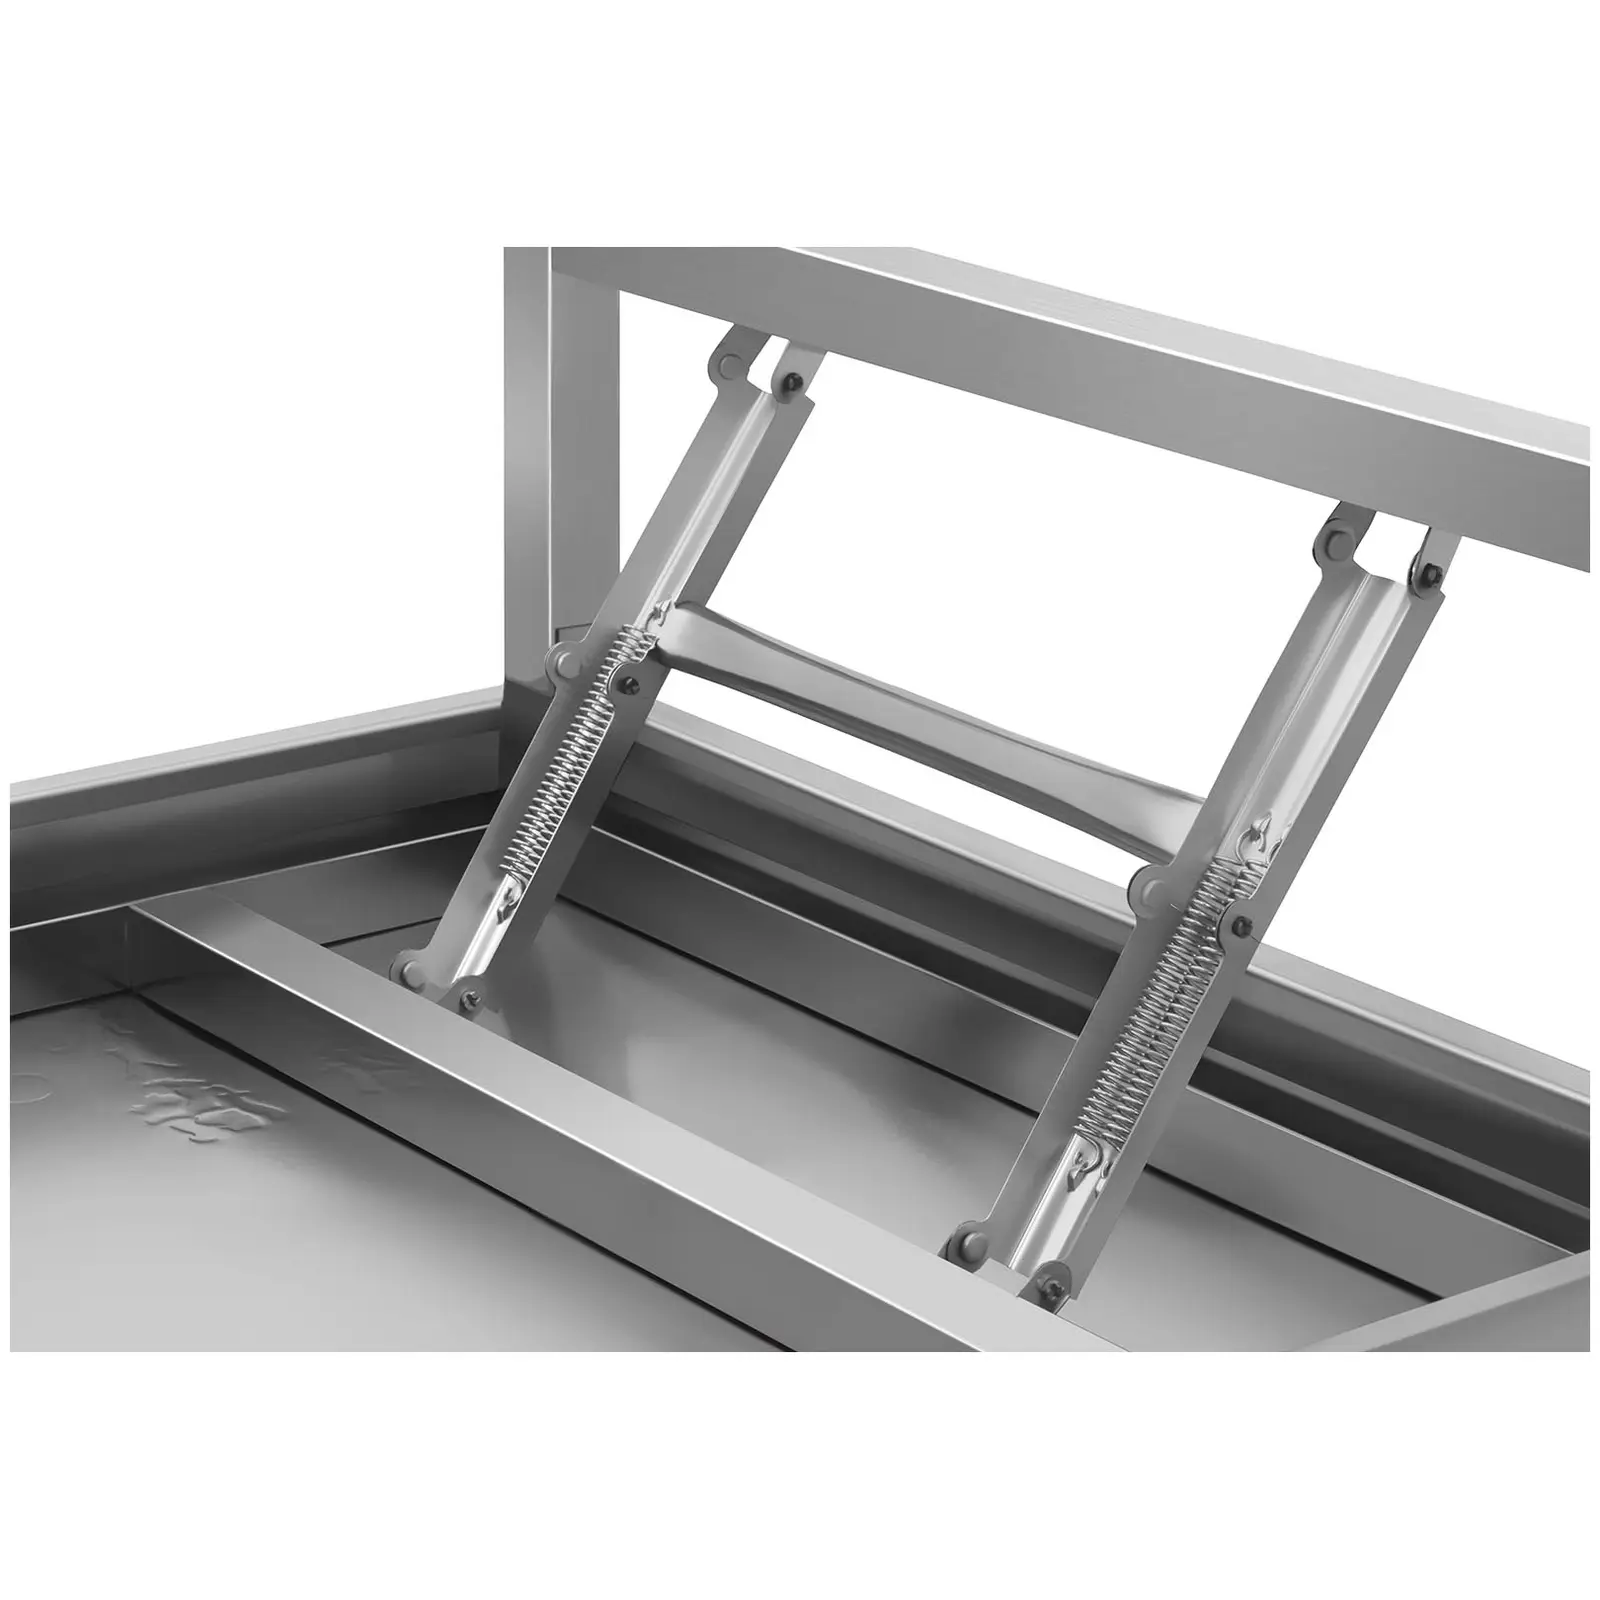 Folding Work Table - 70 x 120 cm - 215 kg load capacity